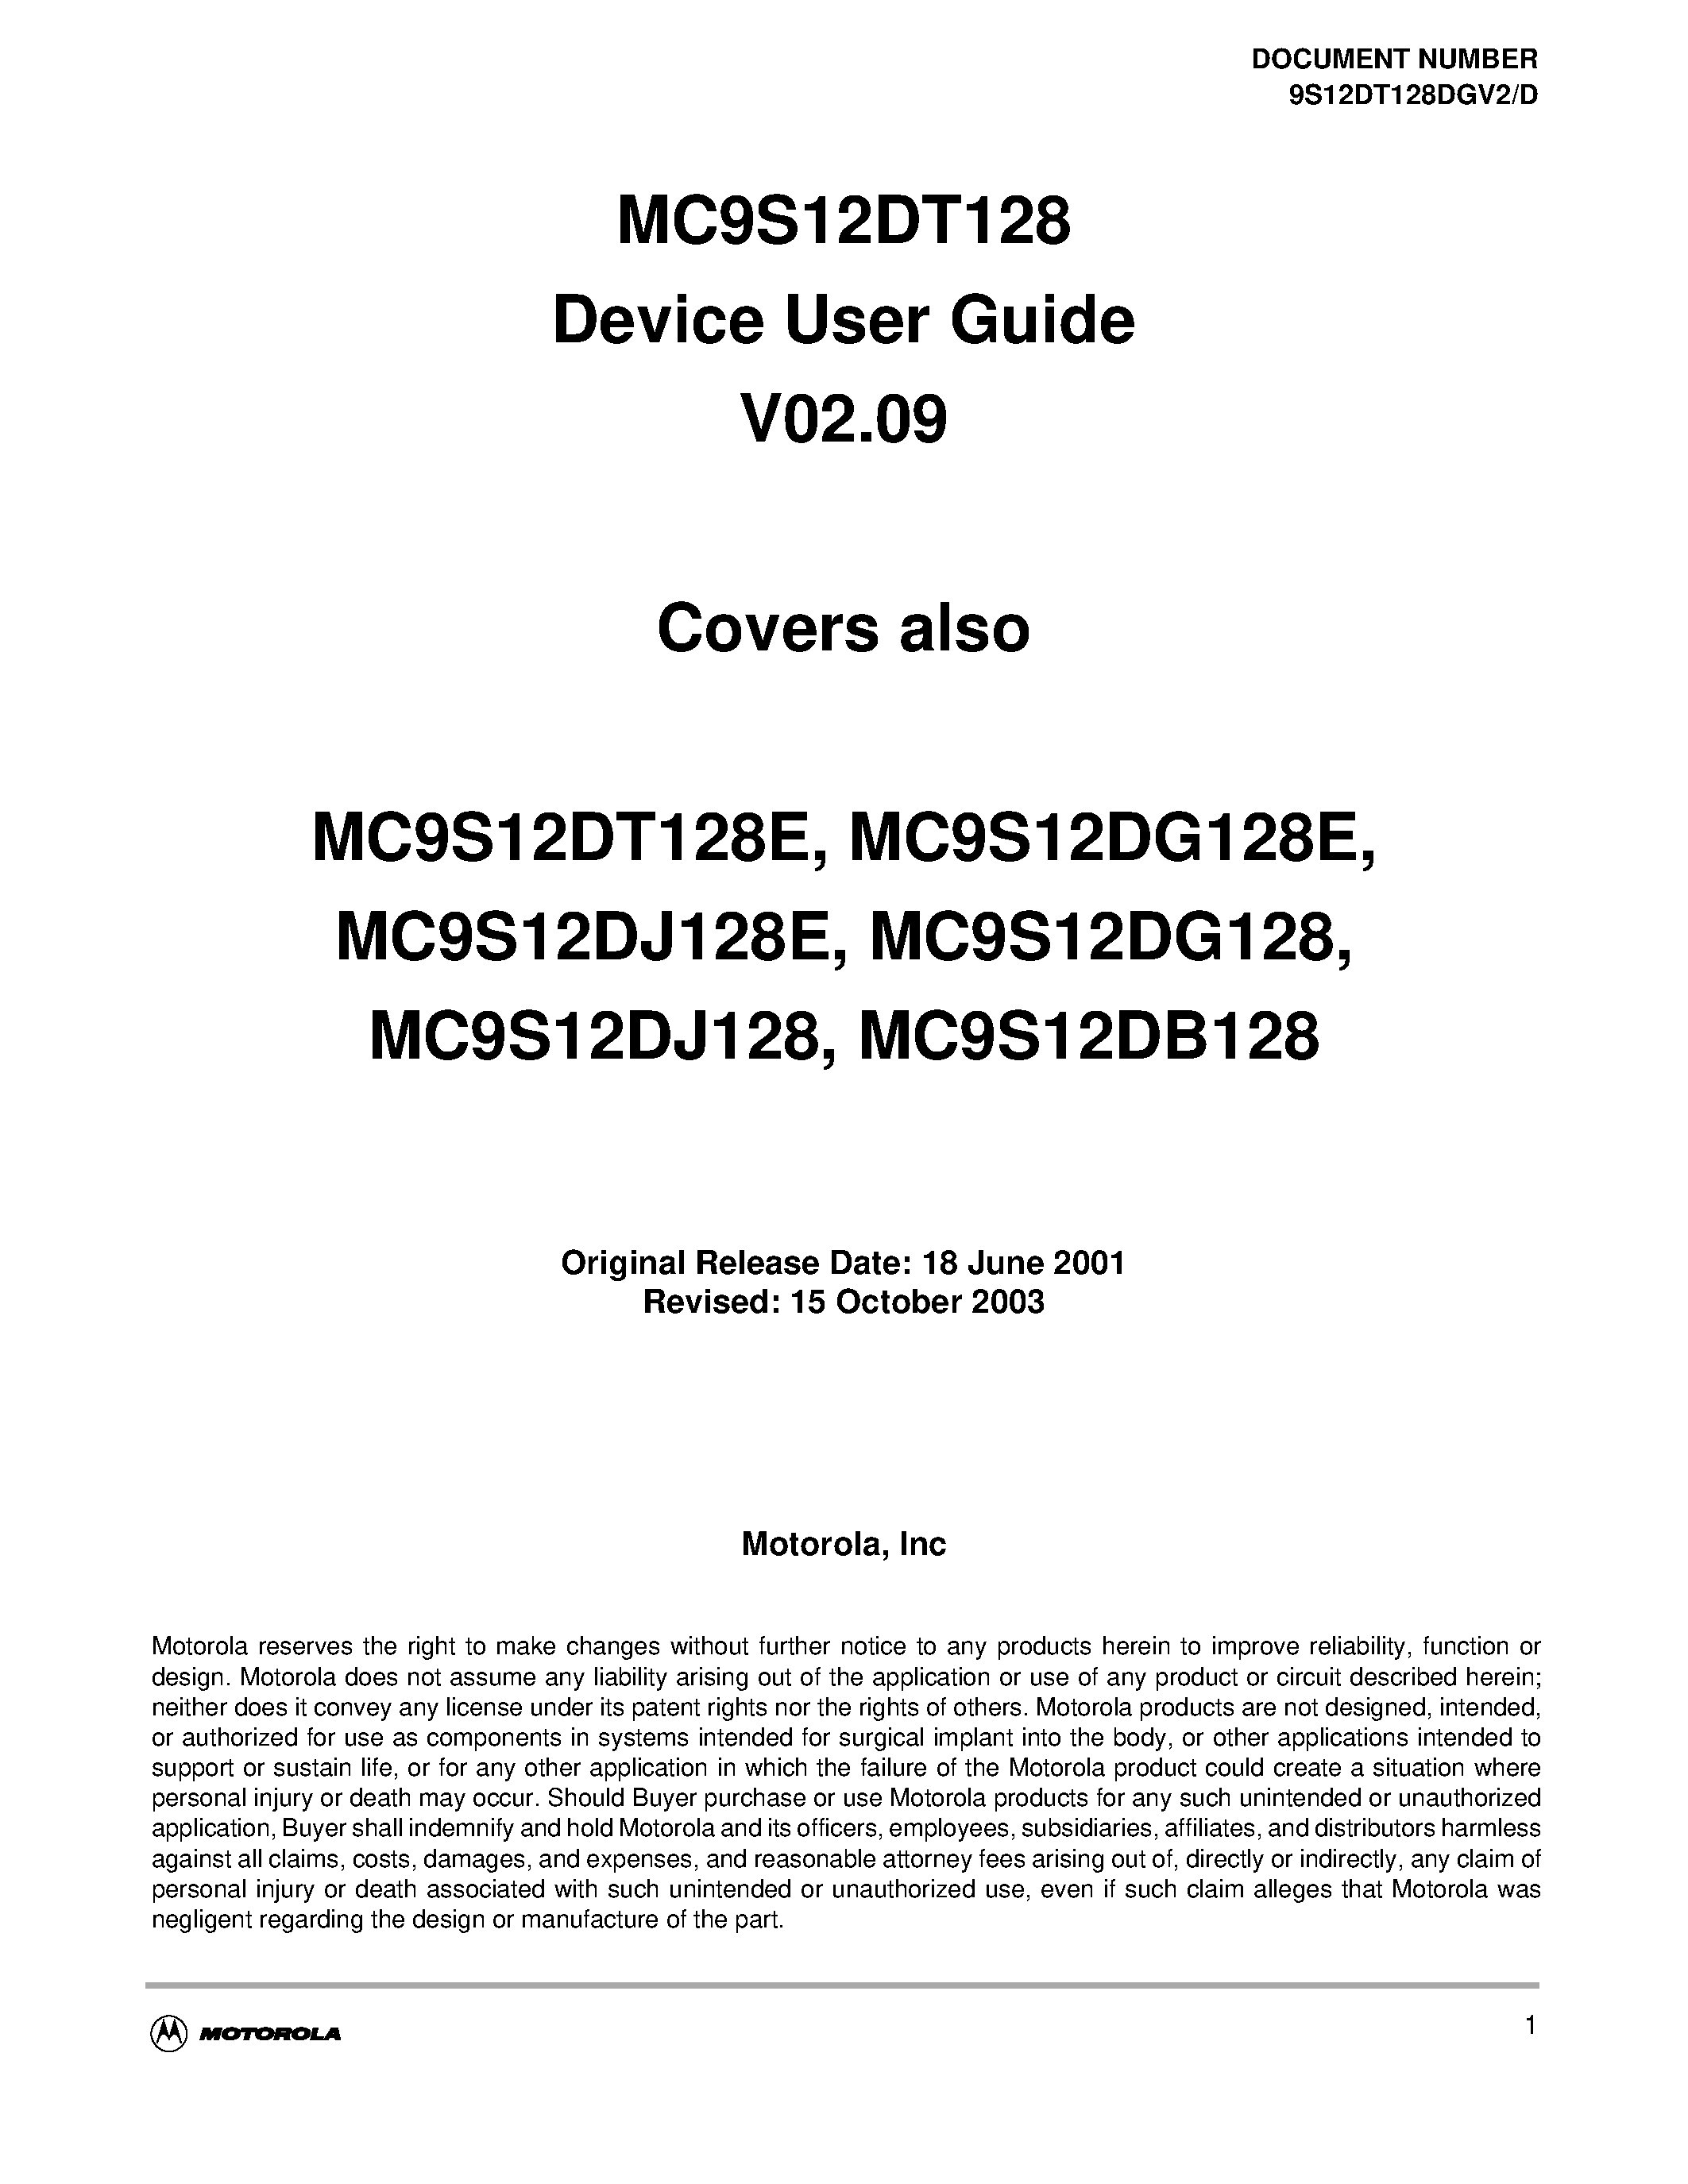 Datasheet S12PWM8B8CV1 - MC9S12DT128 Device User Guide V02.09 page 1